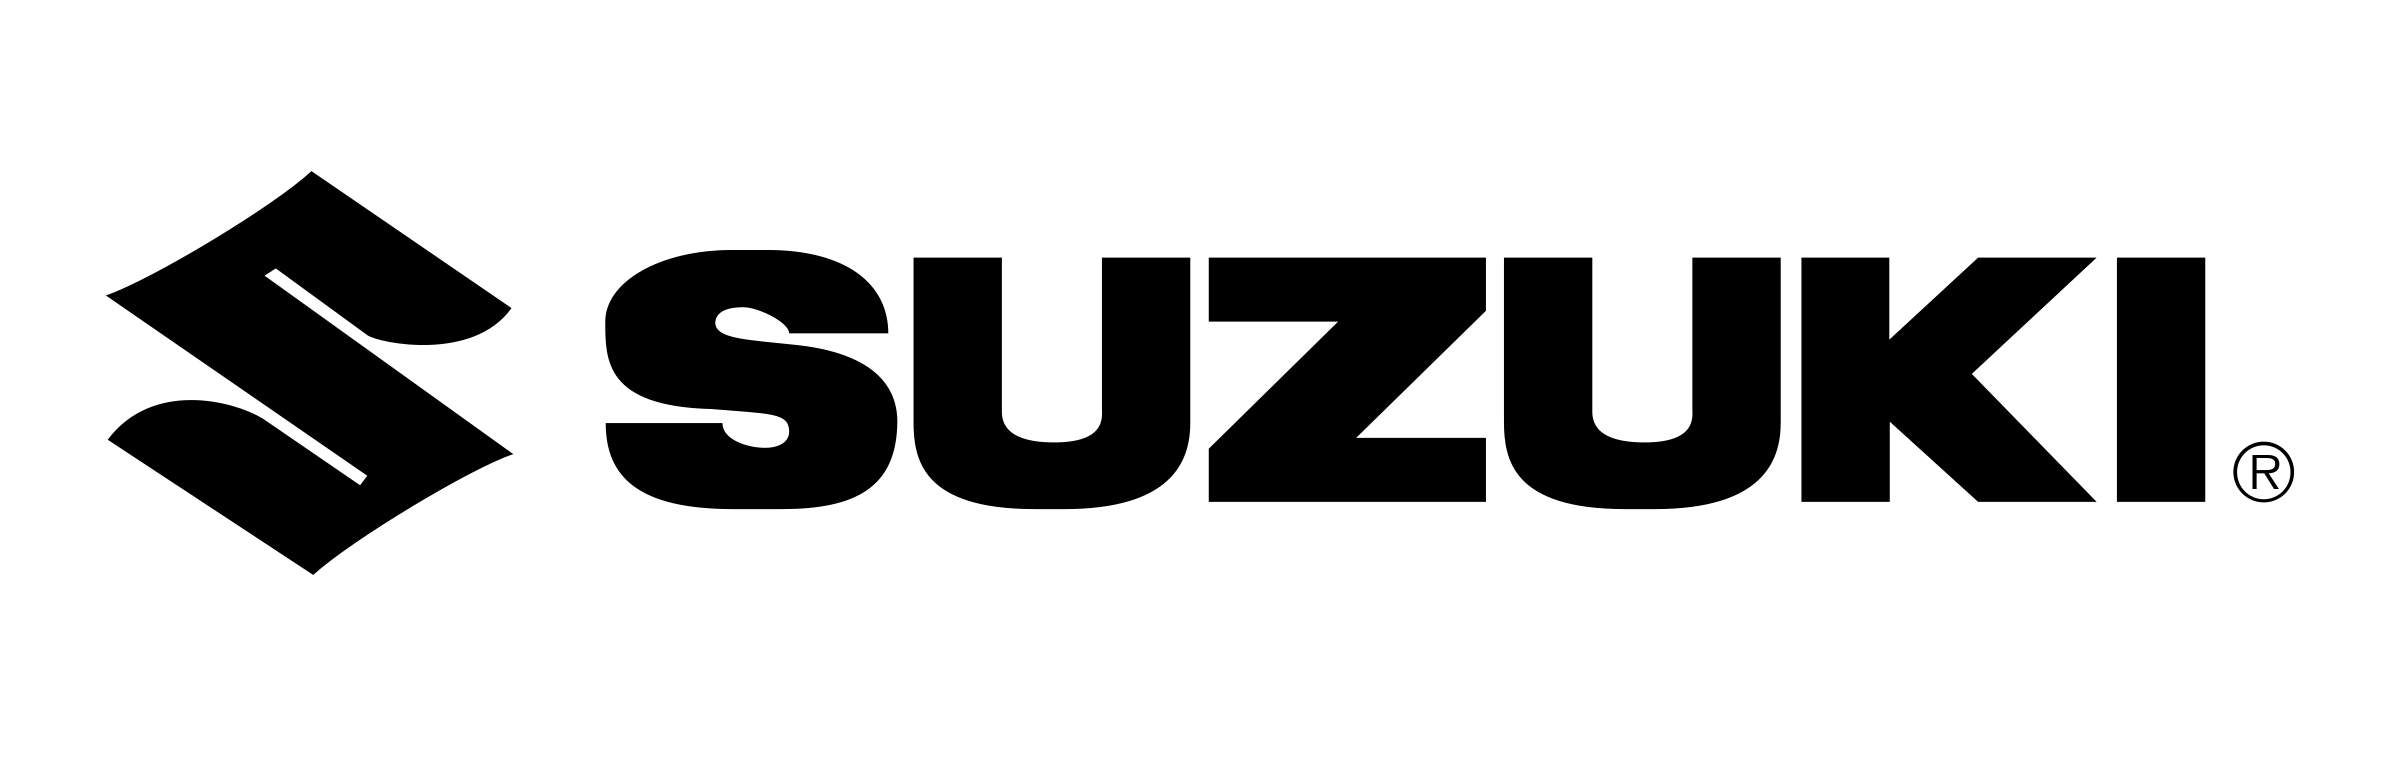 suzuki-2-logo-black-and-white